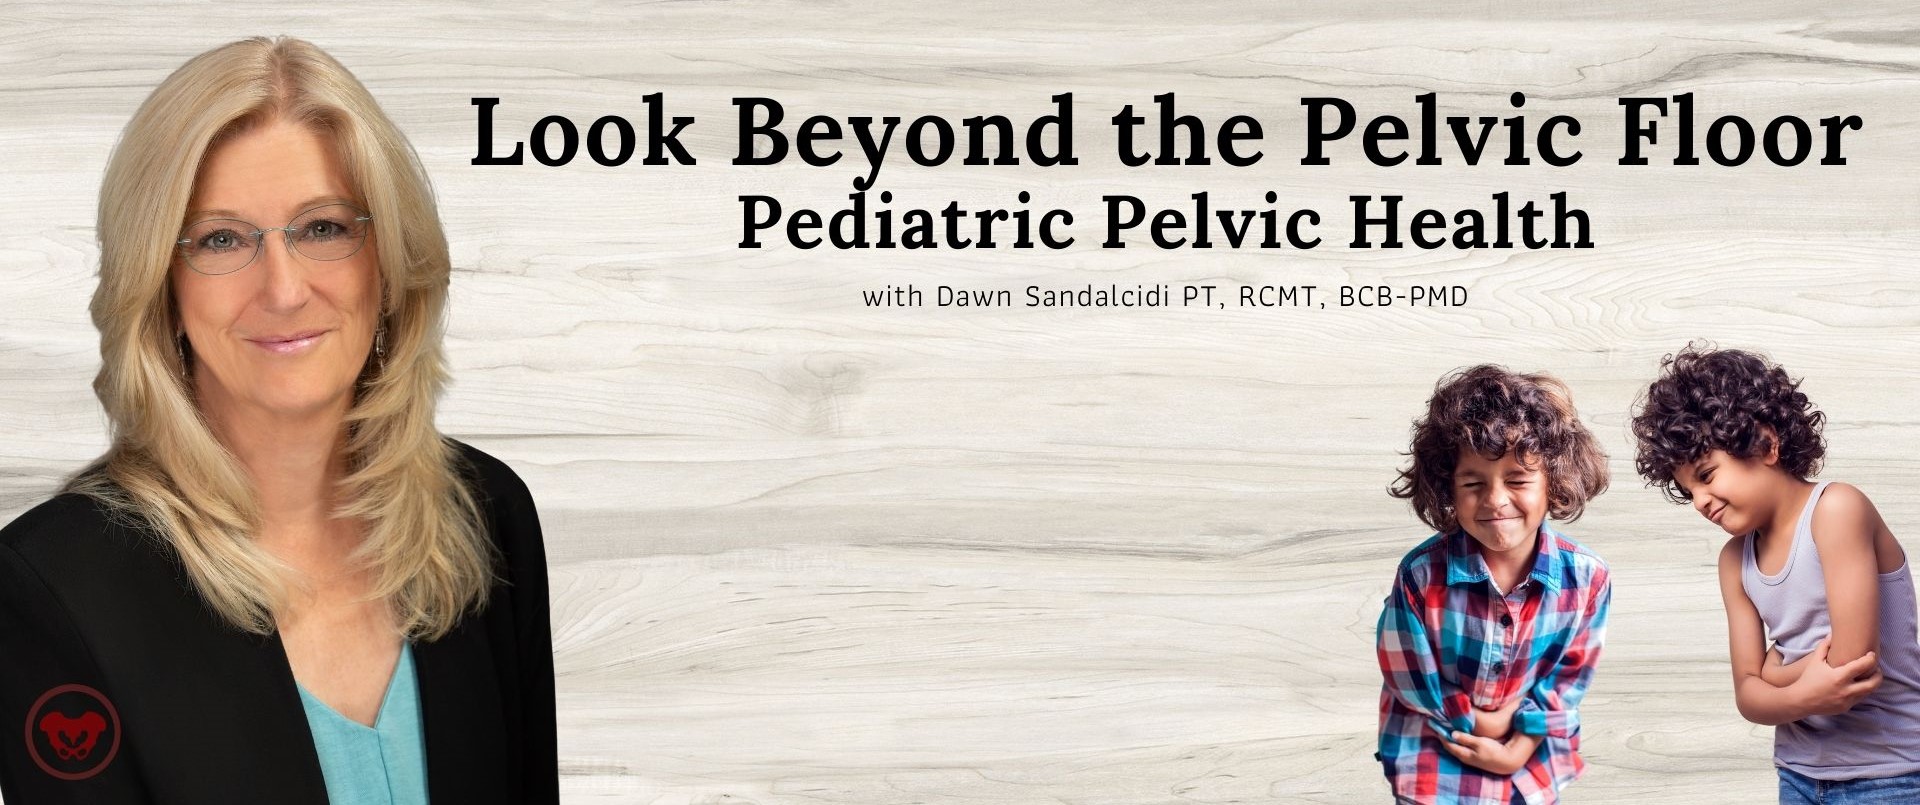 Look Beyond the Pelvic Floor – Pediatric Pelvic Health